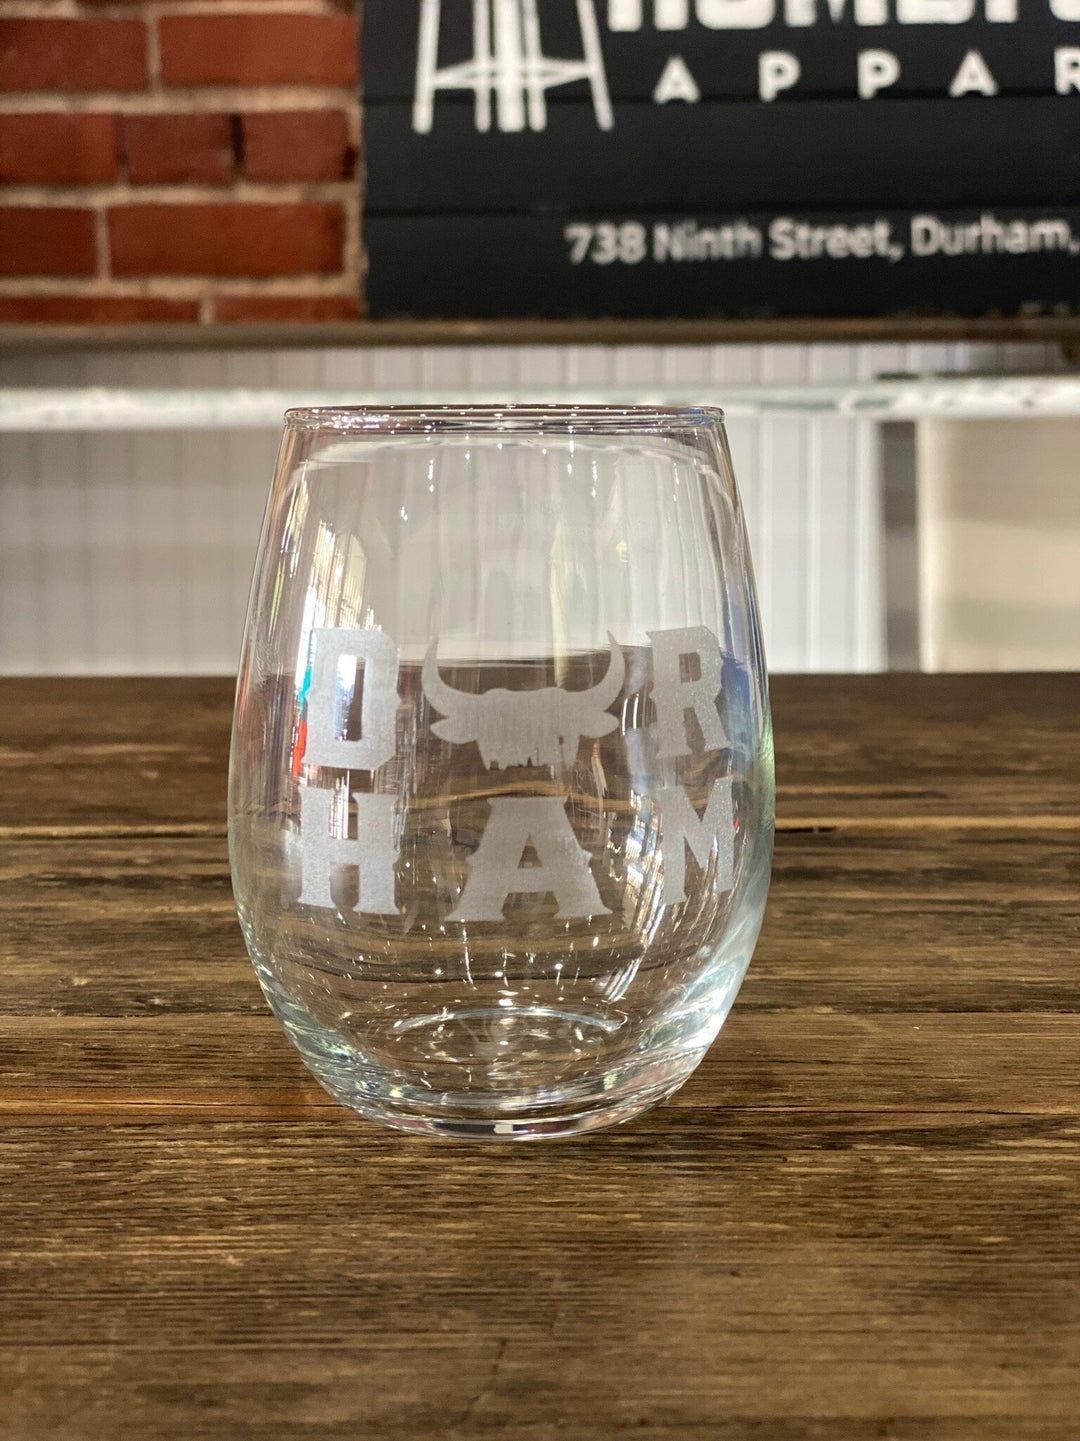 DUR-HAM Wine Glass #12